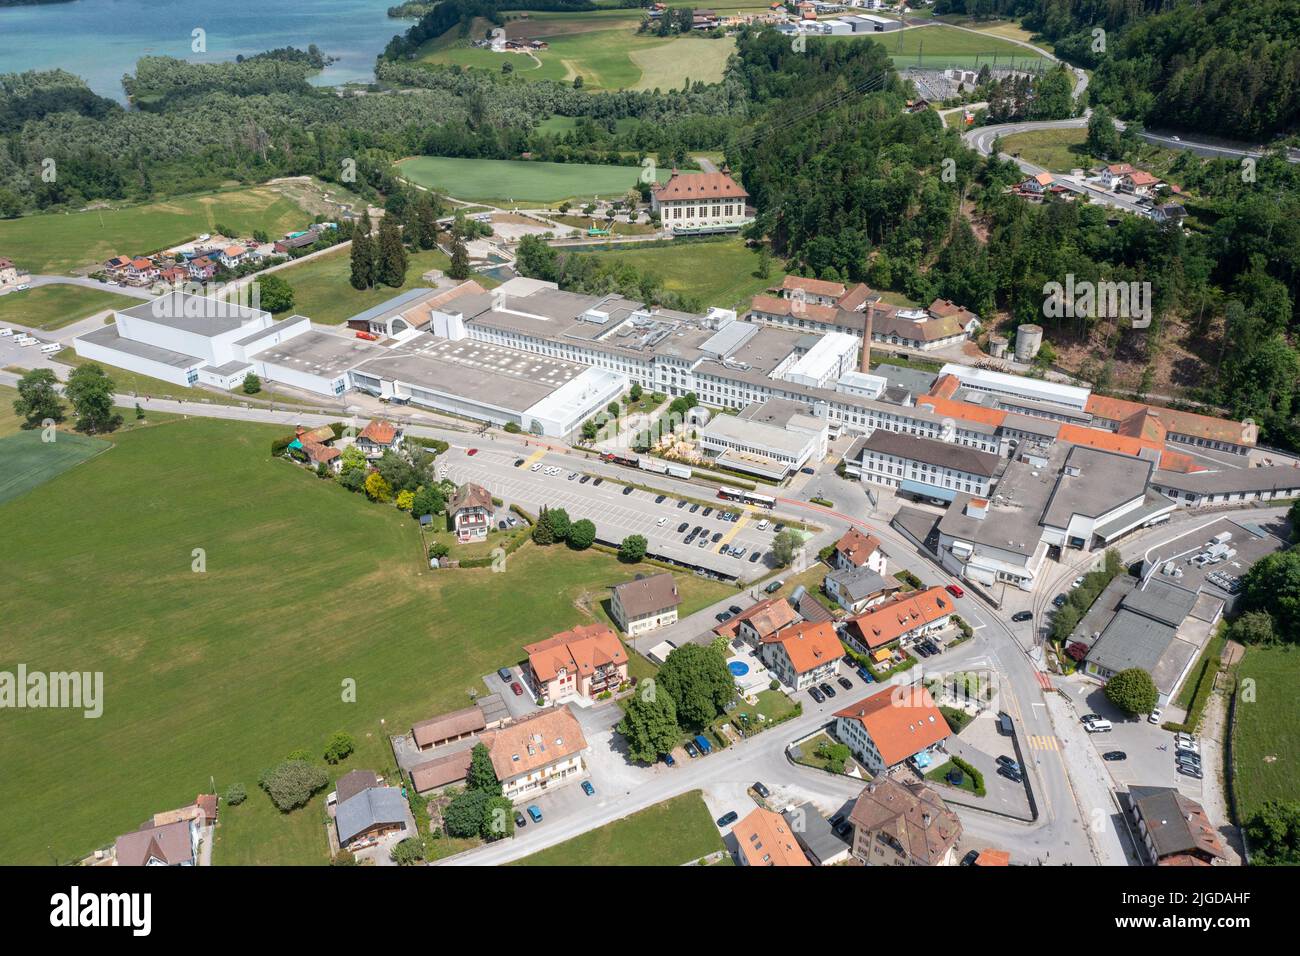 Maison Cailler, Chocolate factory,  Broc, Switzerland Stock Photo